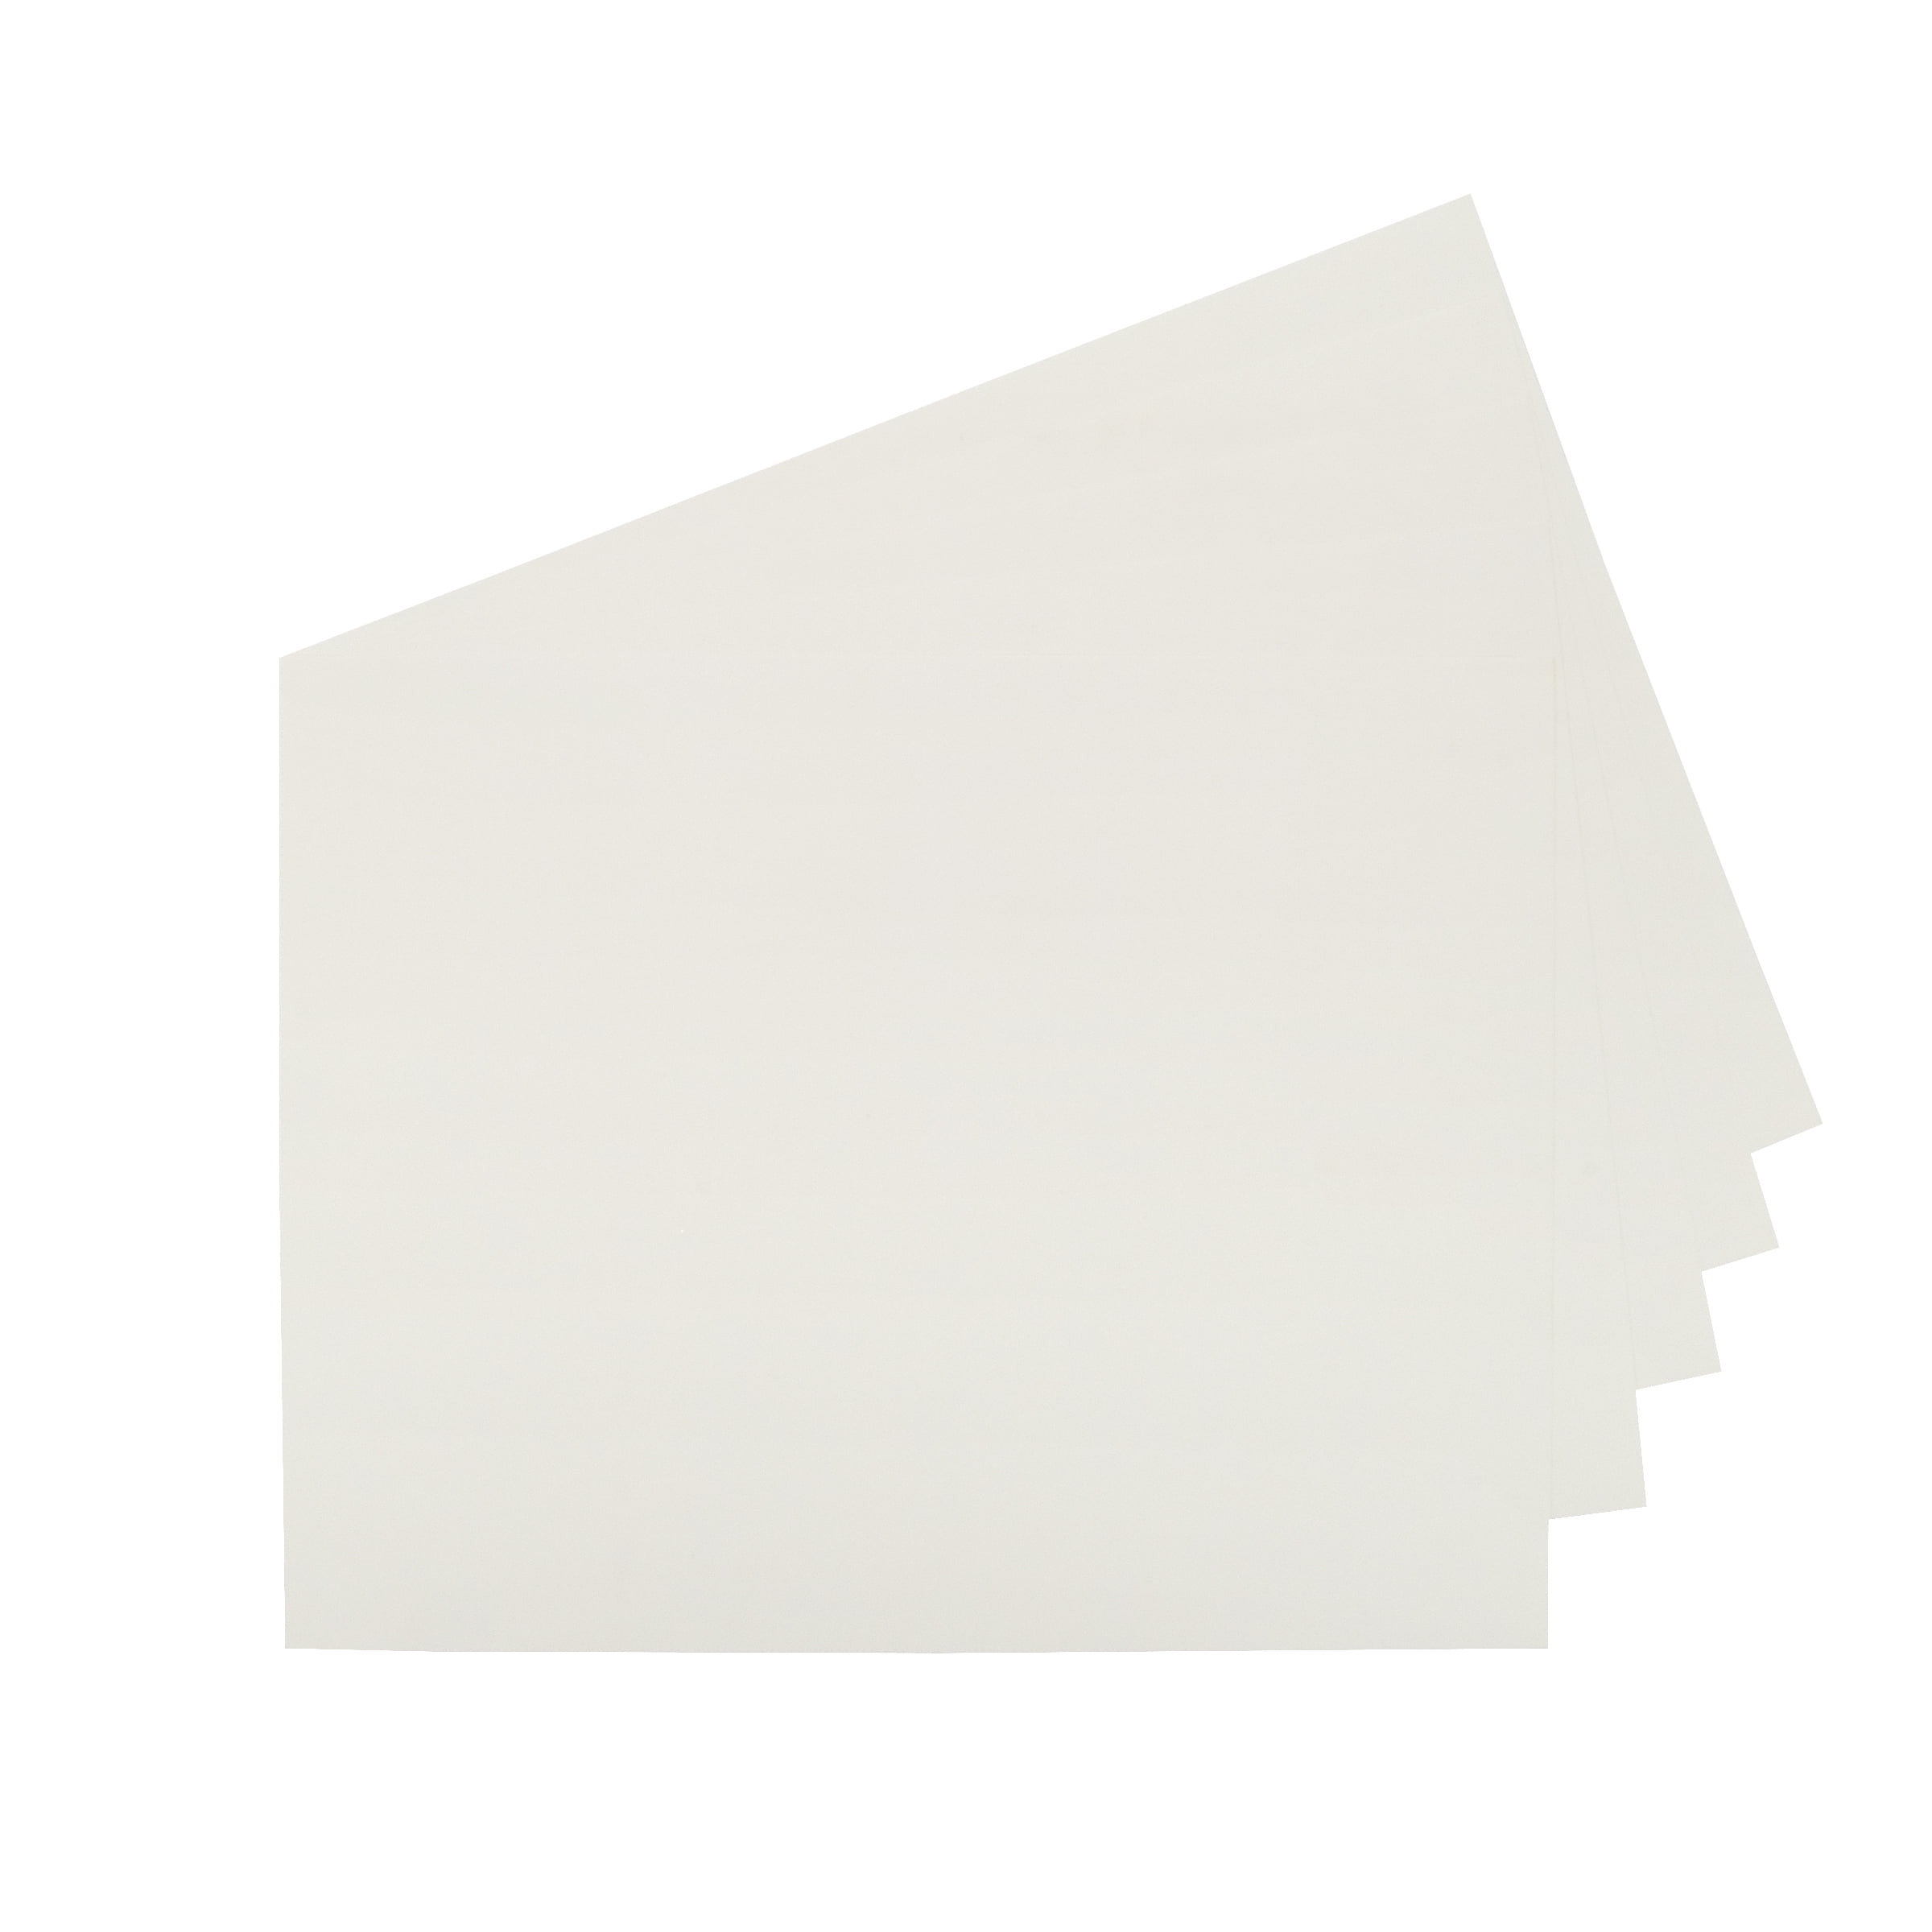 5X UCREATE GHOSTLINE POSTER BOARD WHITE, 5 SHEETS EA, 11X14